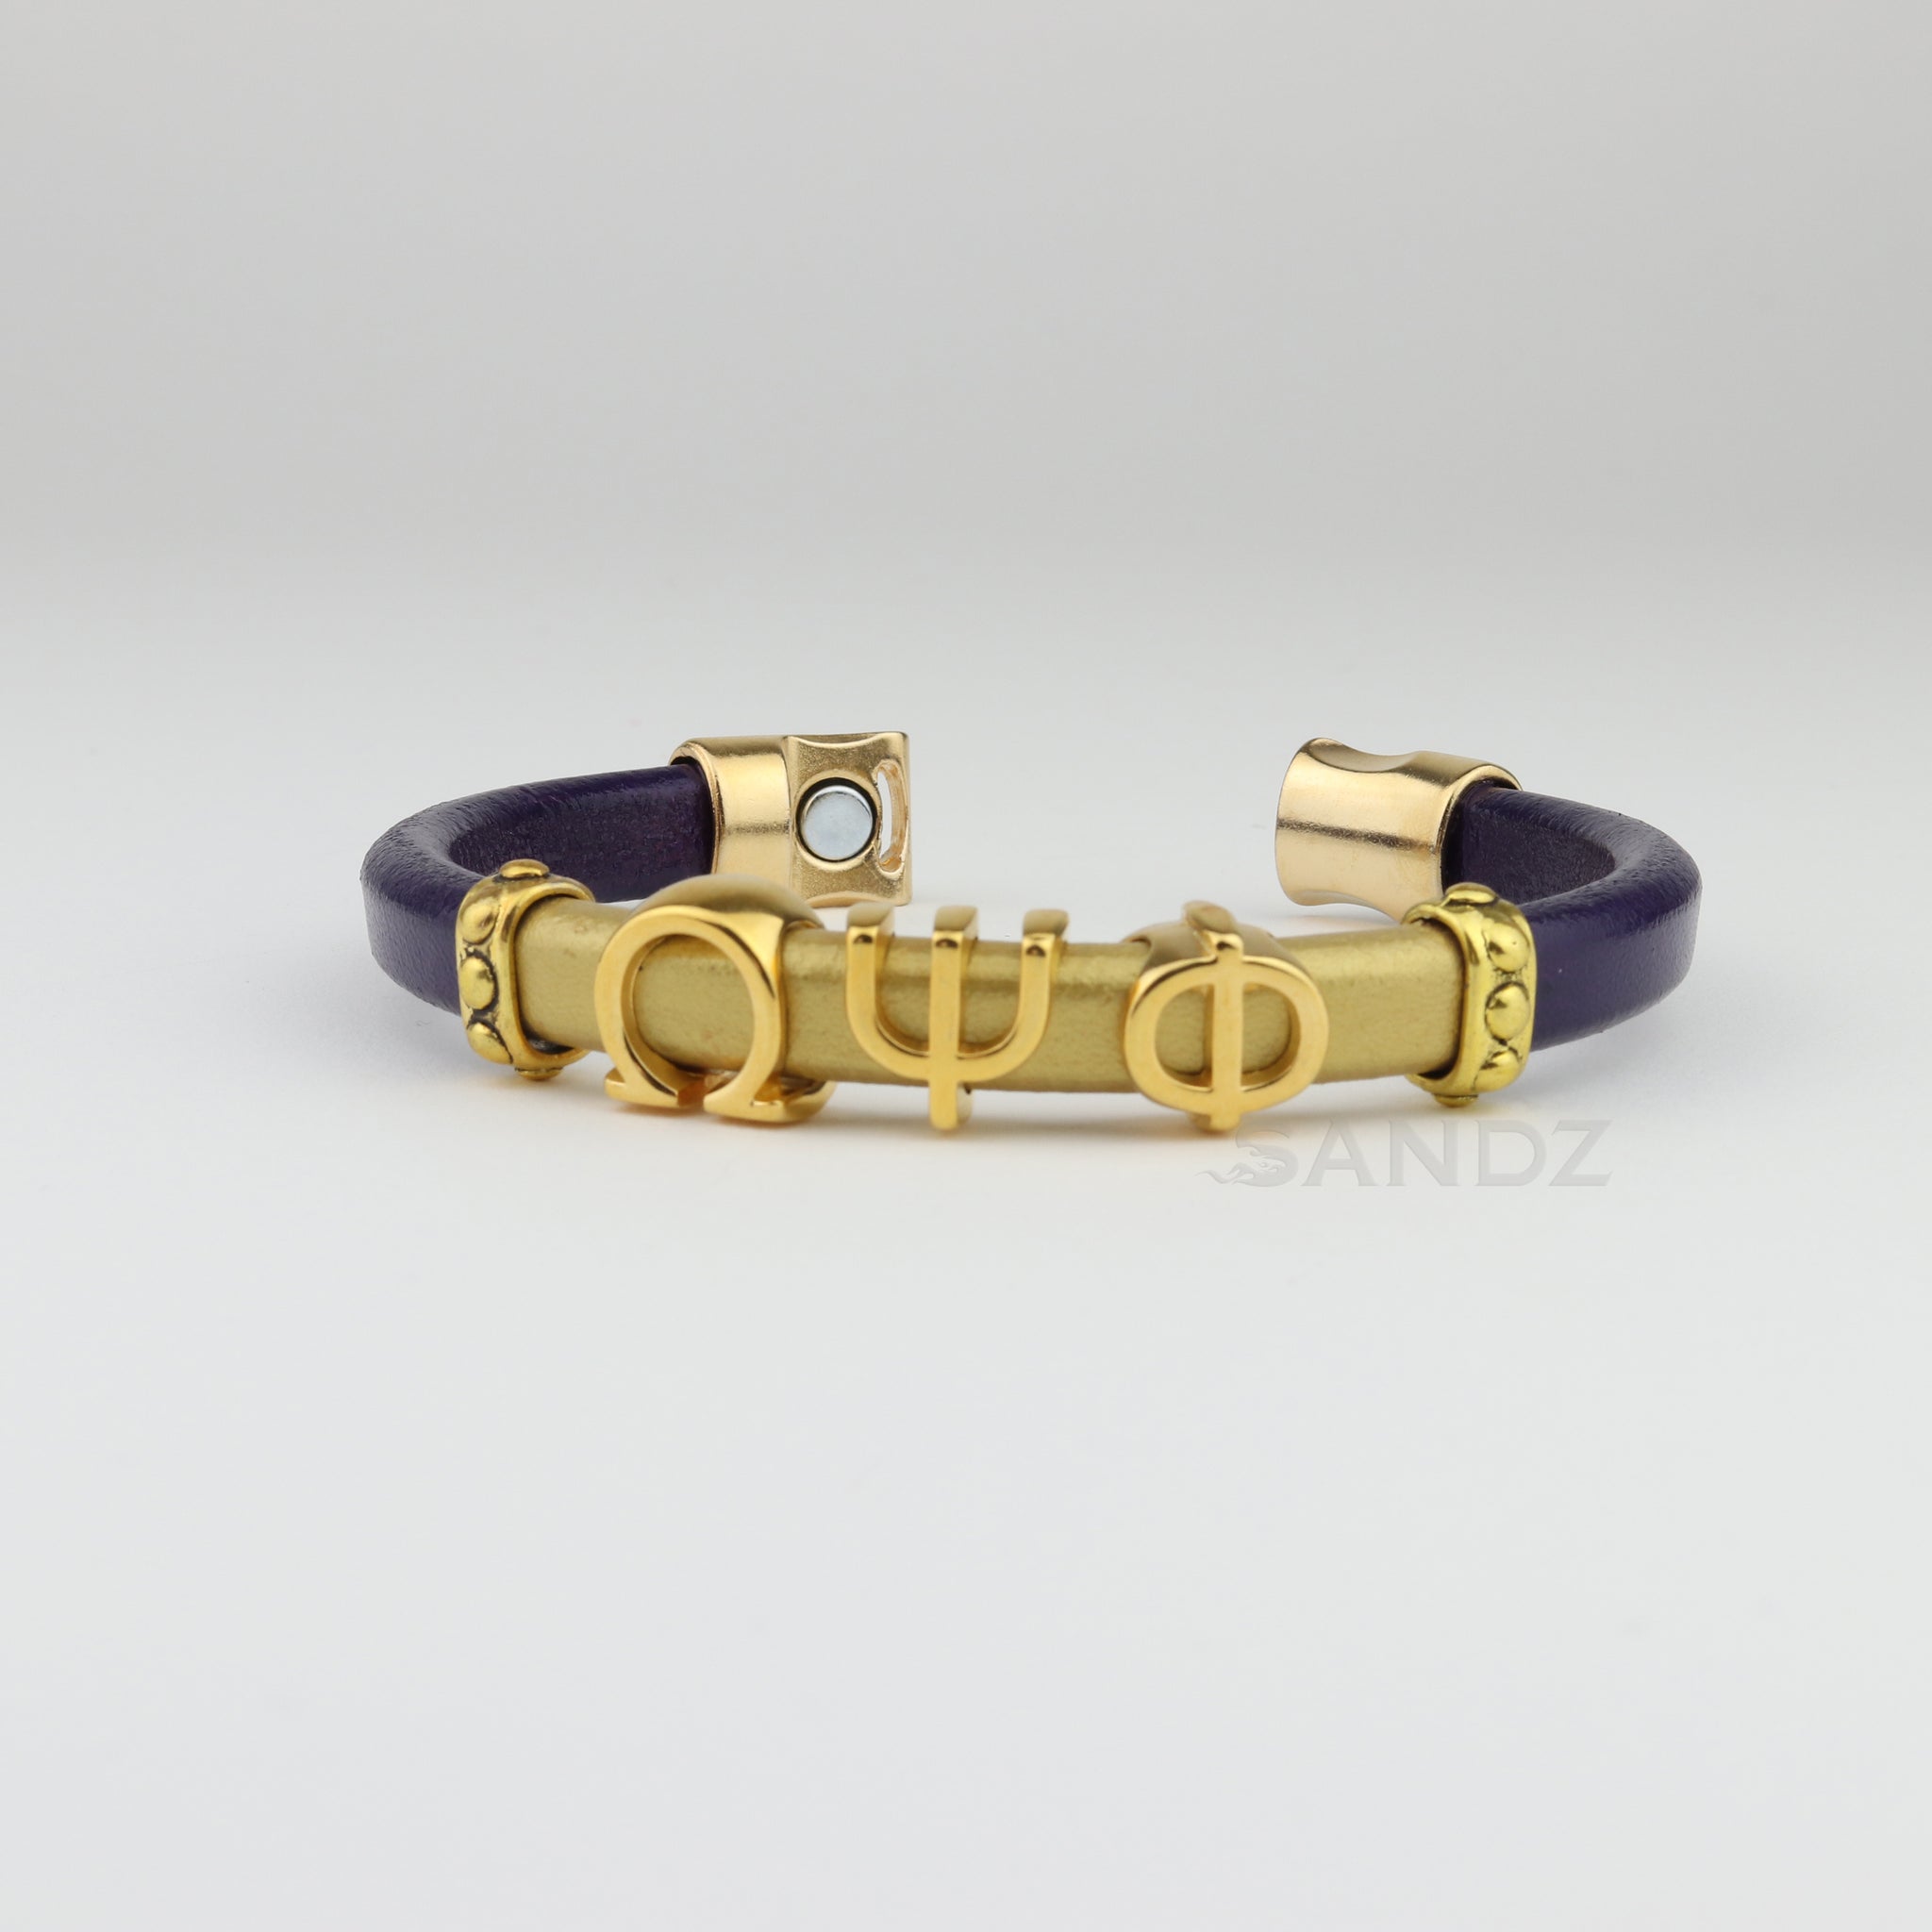 Omega Psi Phi leather bracelet \